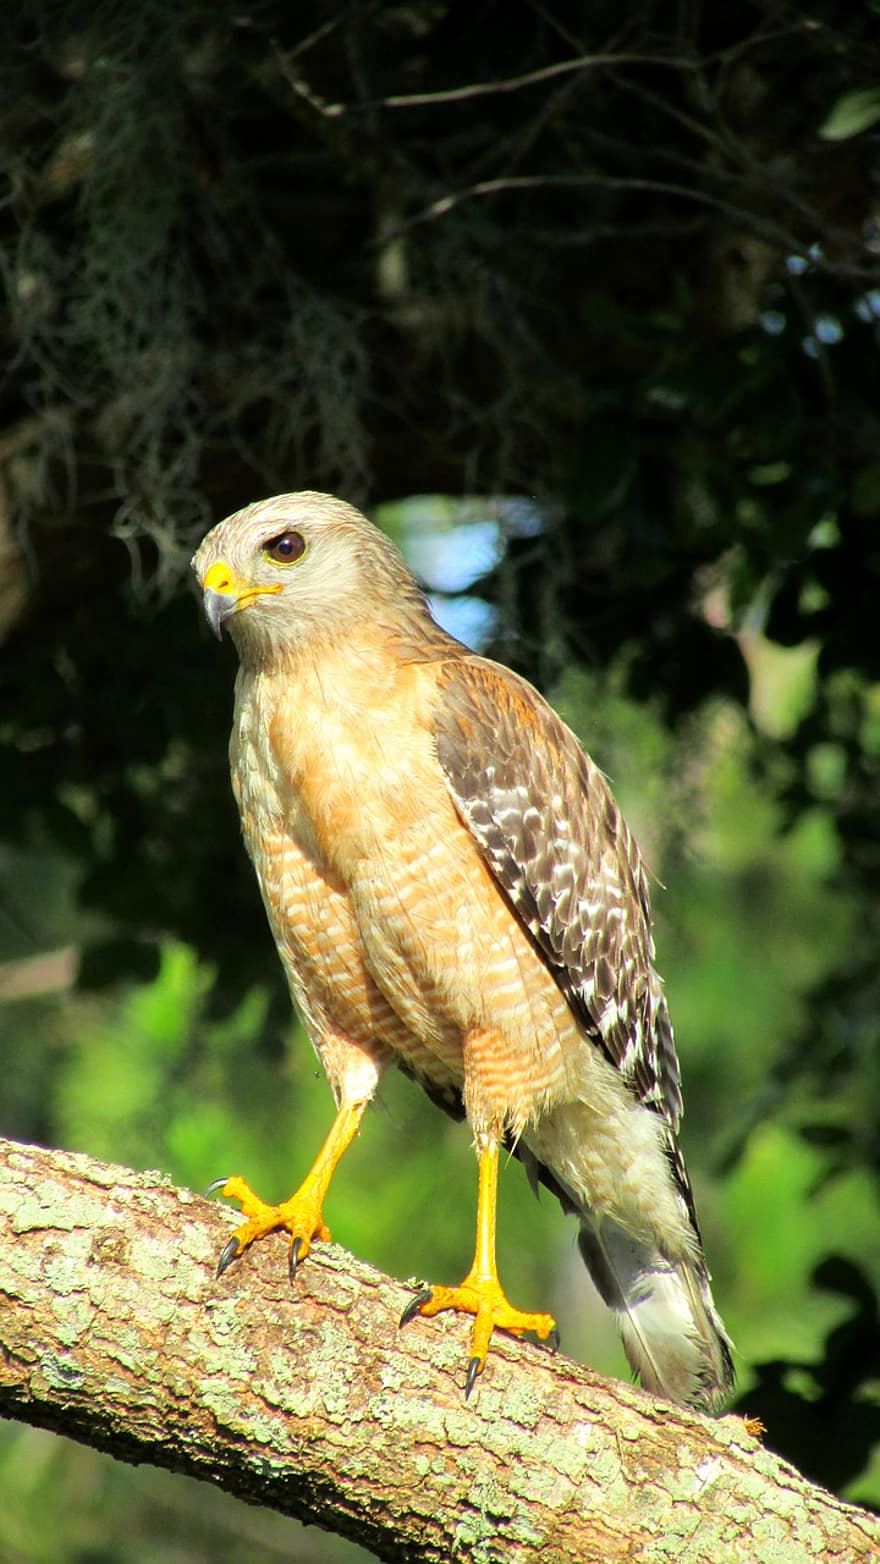 Red-shouldered, Hawk, Bird, Perched, Animal, Feathers, Plumage, Beak, Bill, Bird Watching, Ornithology